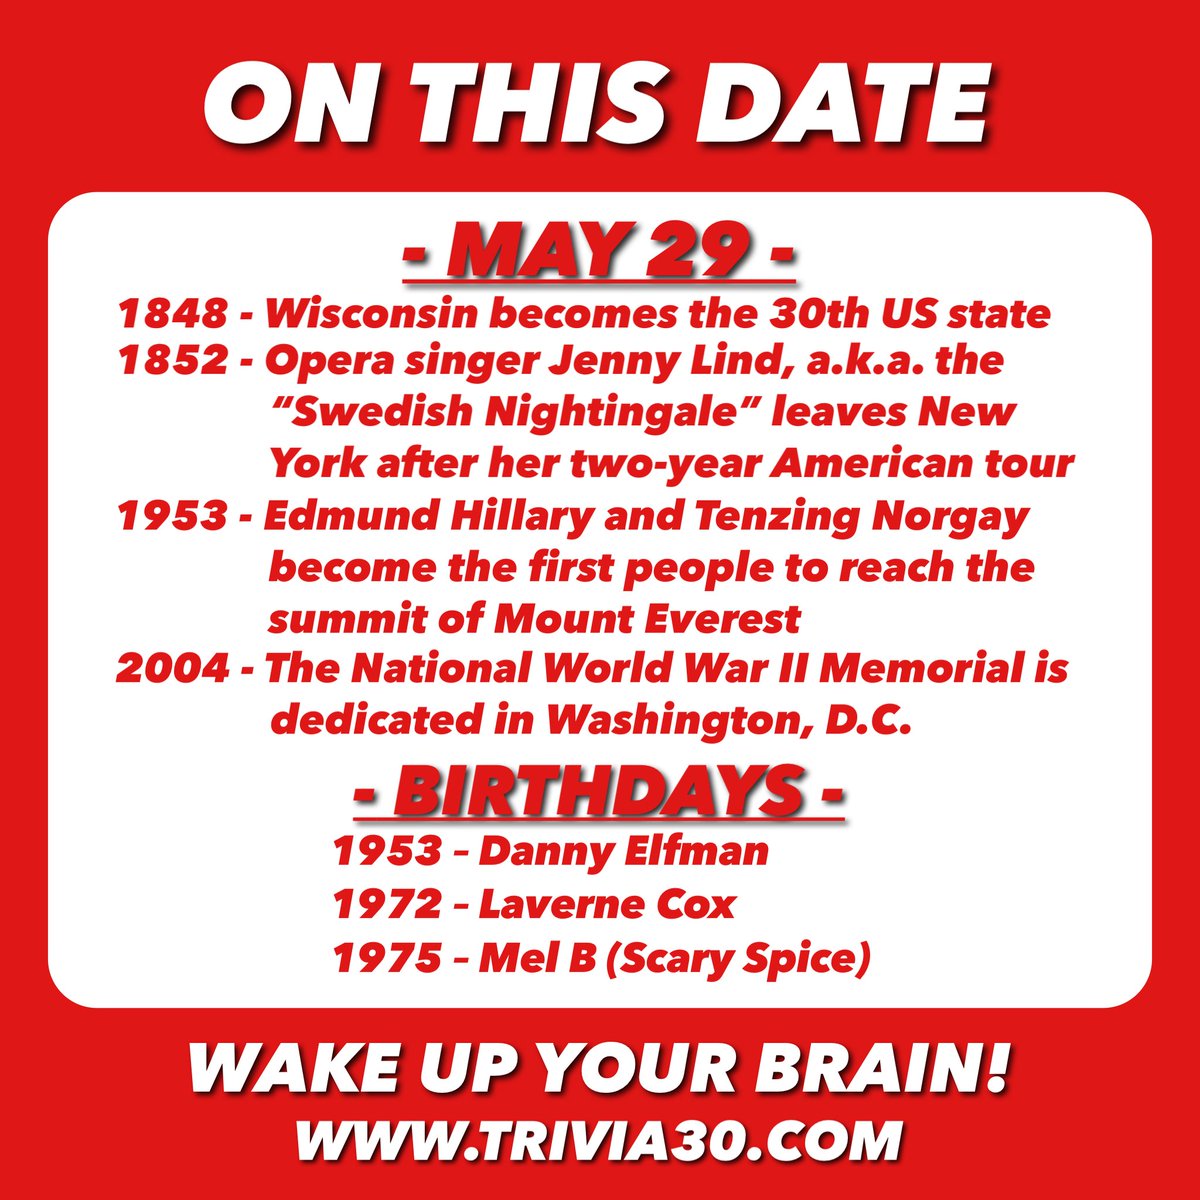 Your 5/29 OTD trivia. No shows tonight due to Memorial Day, have a great Monday! #TRIVIA30 #WakeUpYourBrain #OnThisDay #Wisconsin #JennyLind #opera #EdmundHillary #TenzingNorgay #Sherpa #MtEverest #WWII #WashingtonDC #DannyElfman #LaverneCox #MelB #ScarySpice #SpiceGirls